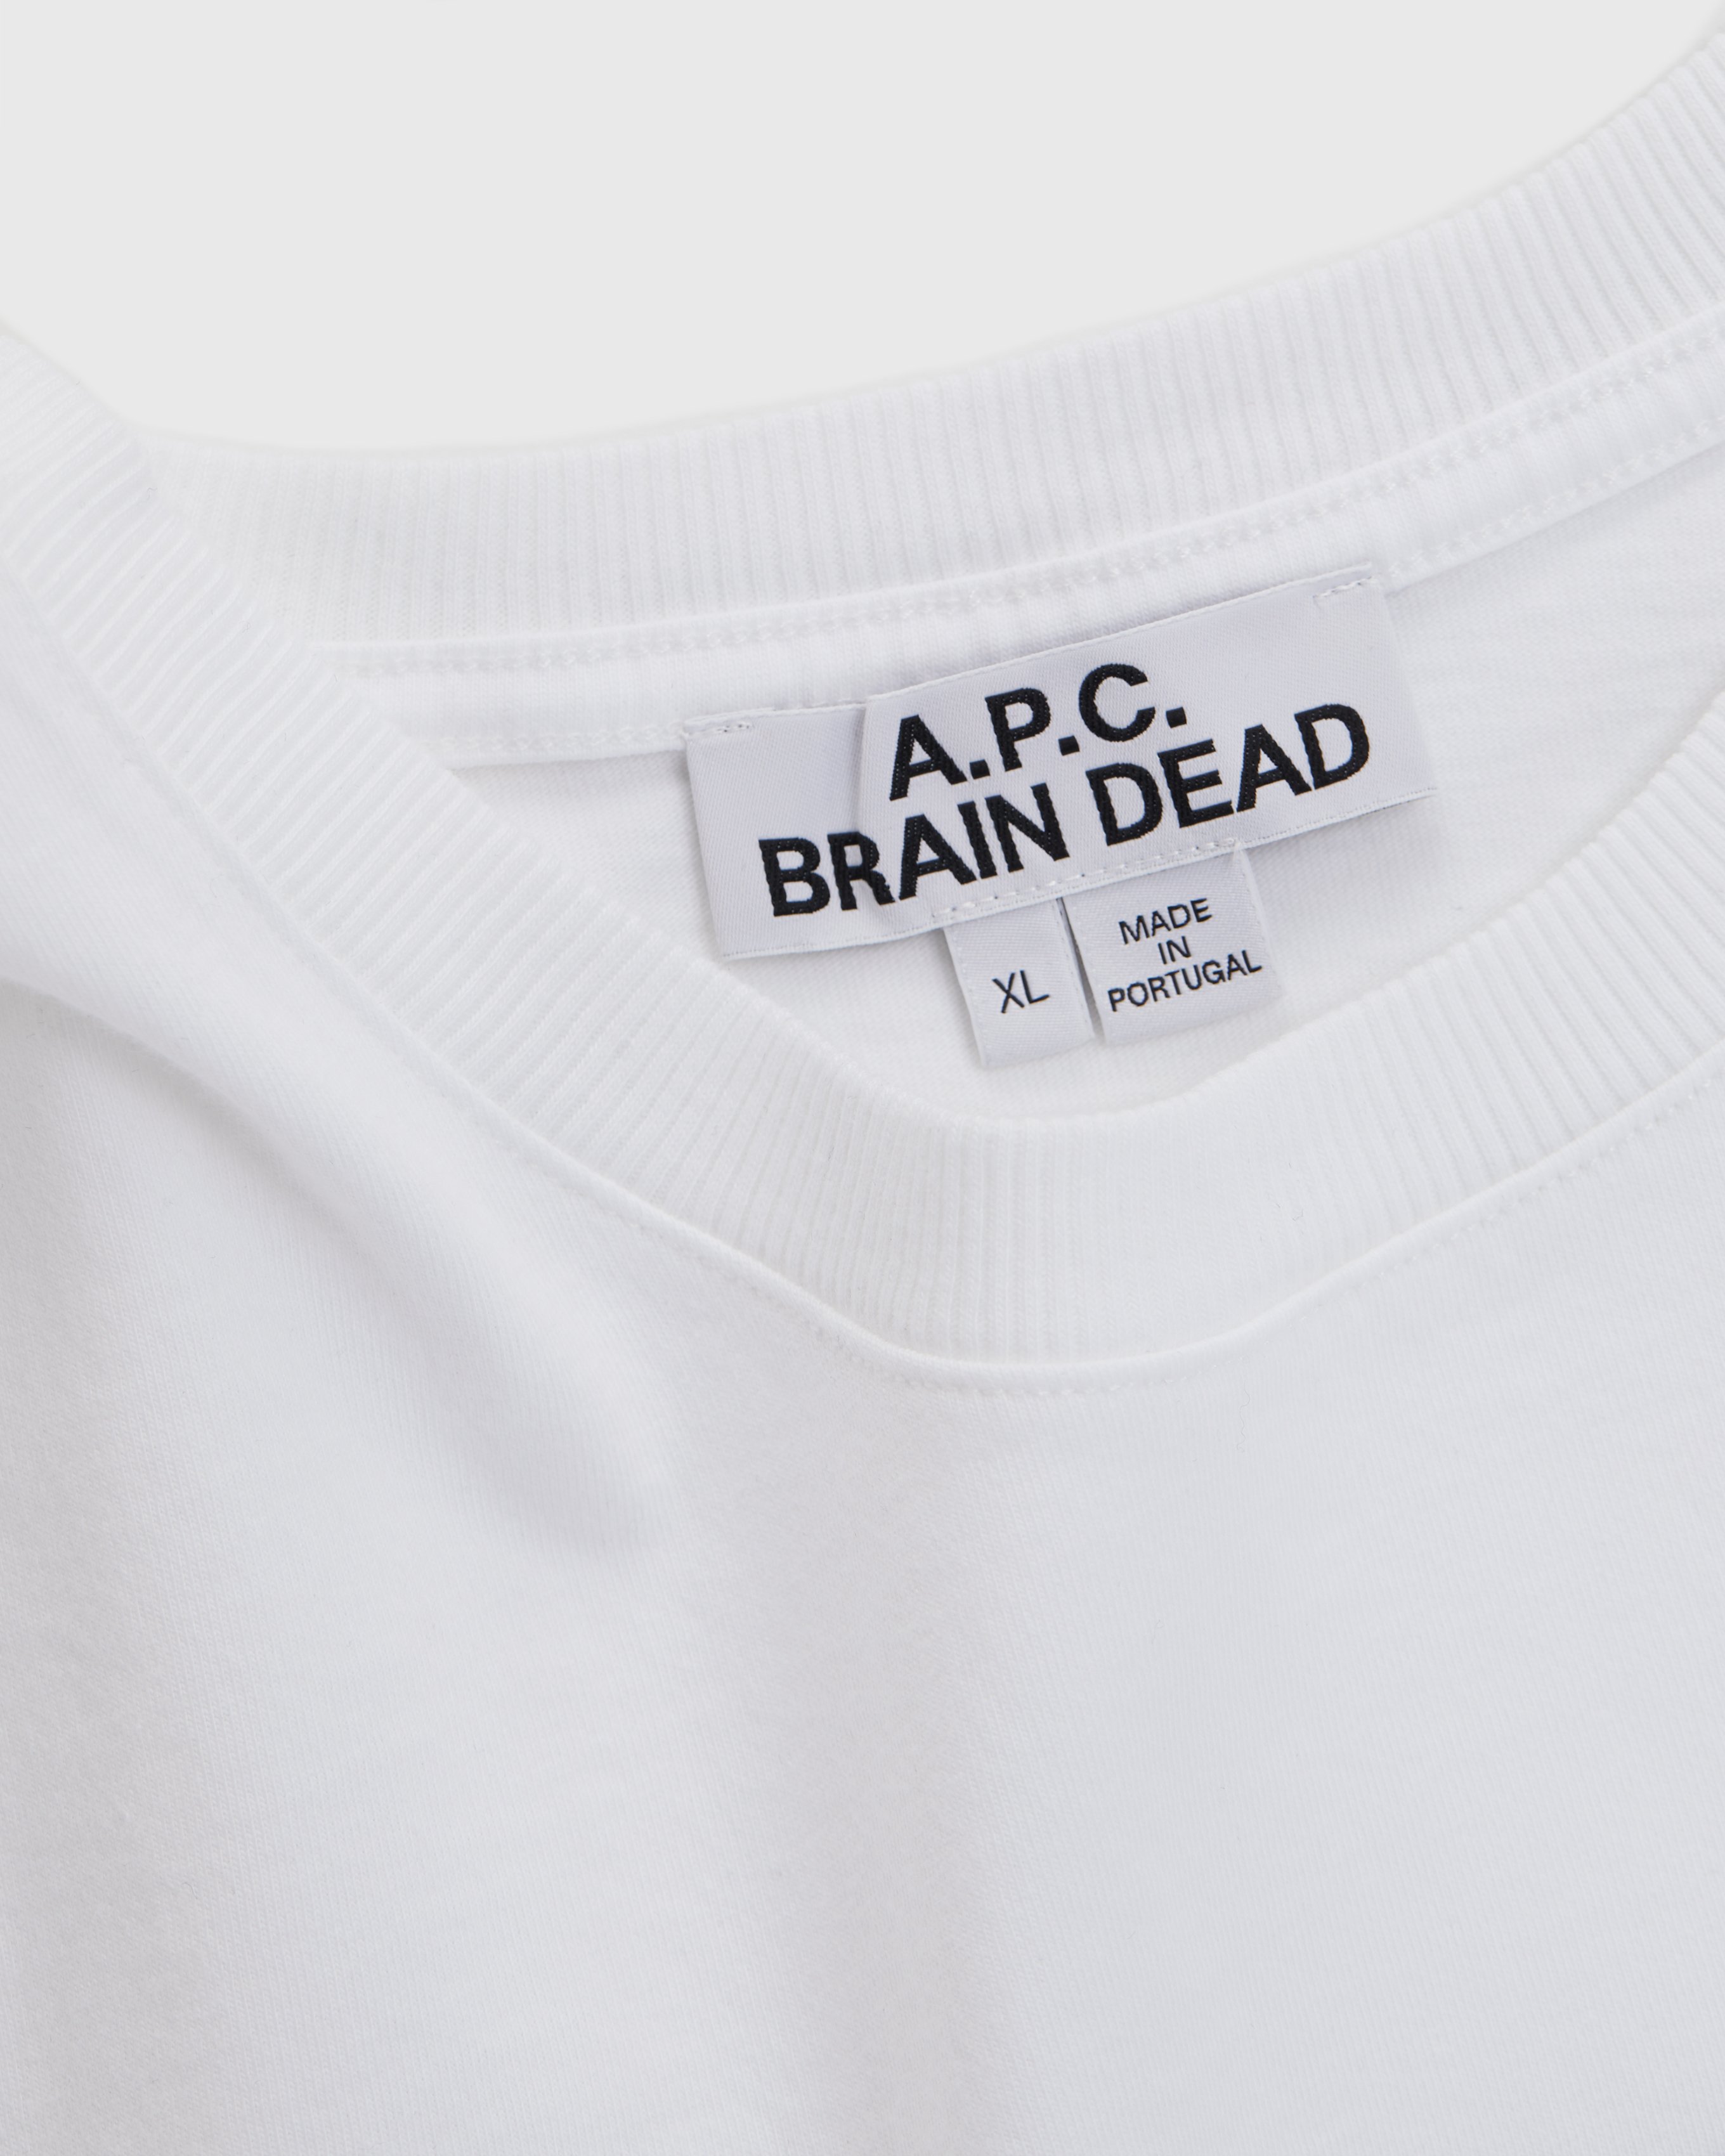 Brain Dead x A.P.C. - Spooky White - Clothing - White - Image 3